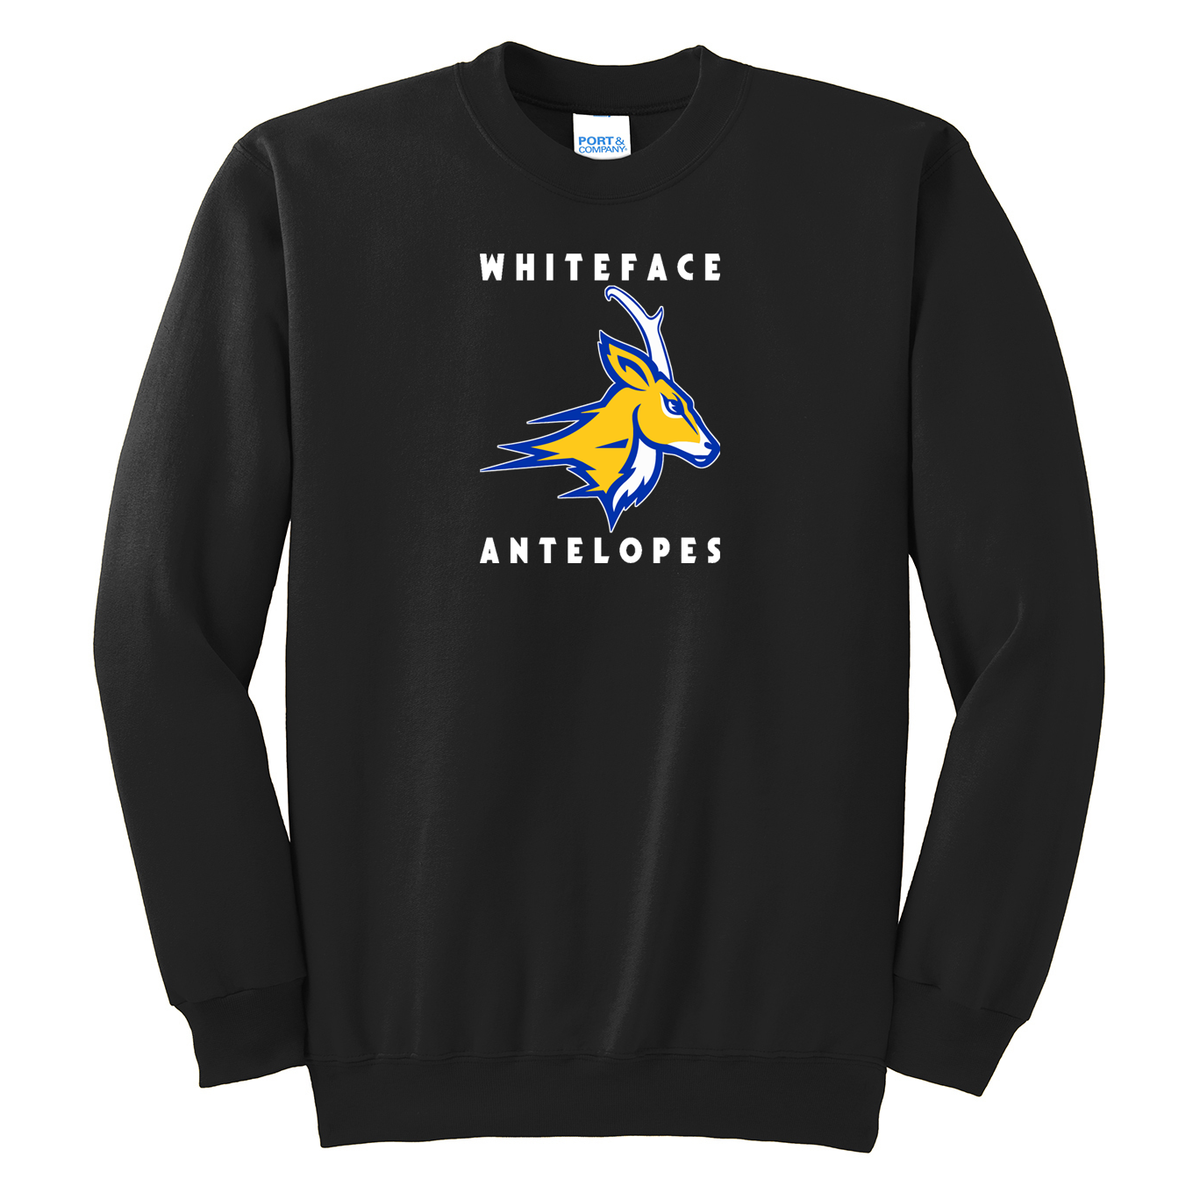 Whiteface Antelopes  Crew Neck Sweater